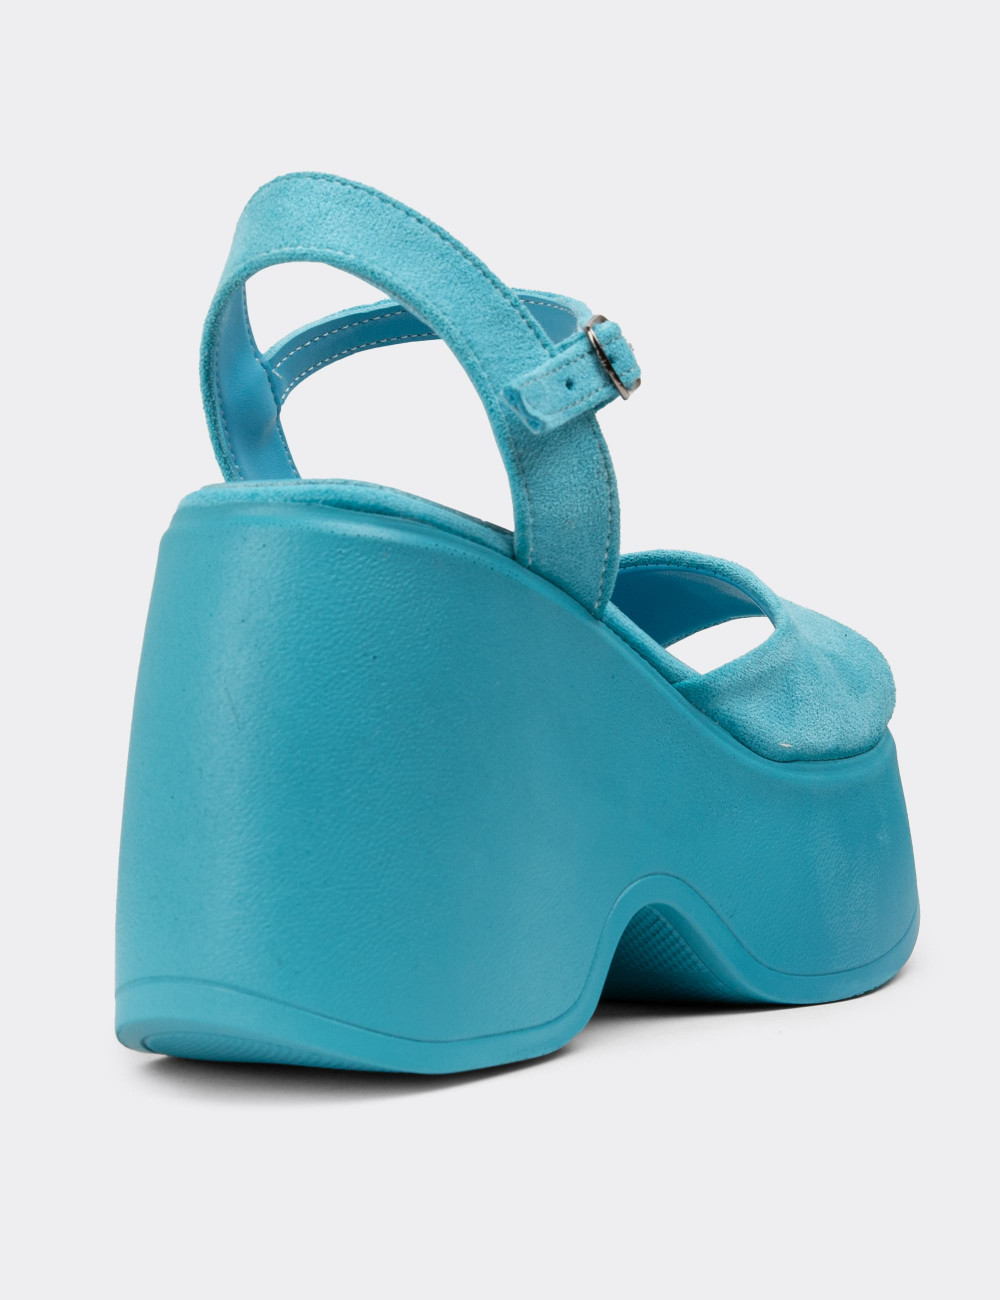 Mavi Süet Platform Topuk Kadın Sandalet - DLG10ZMVIC01